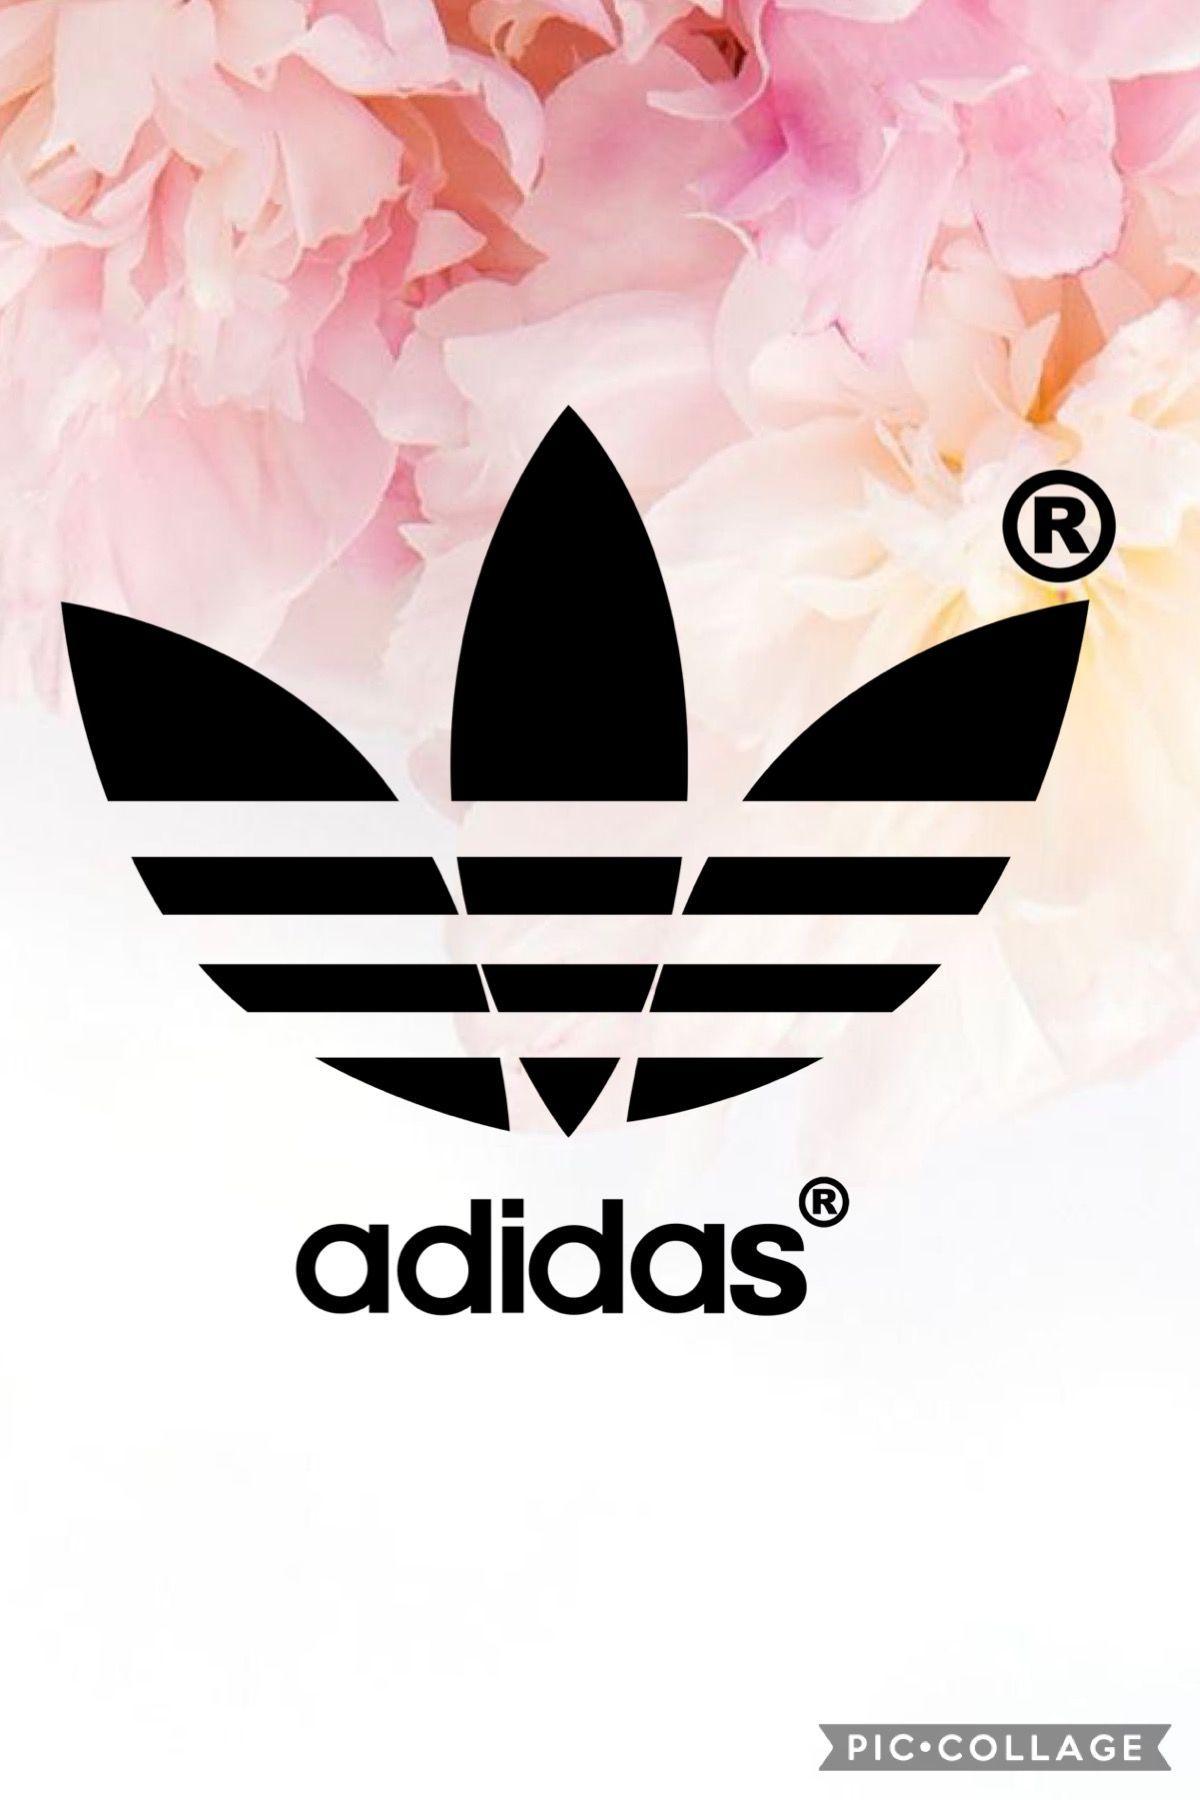 Cute Adidas Logo Wallpapers - Top Free 